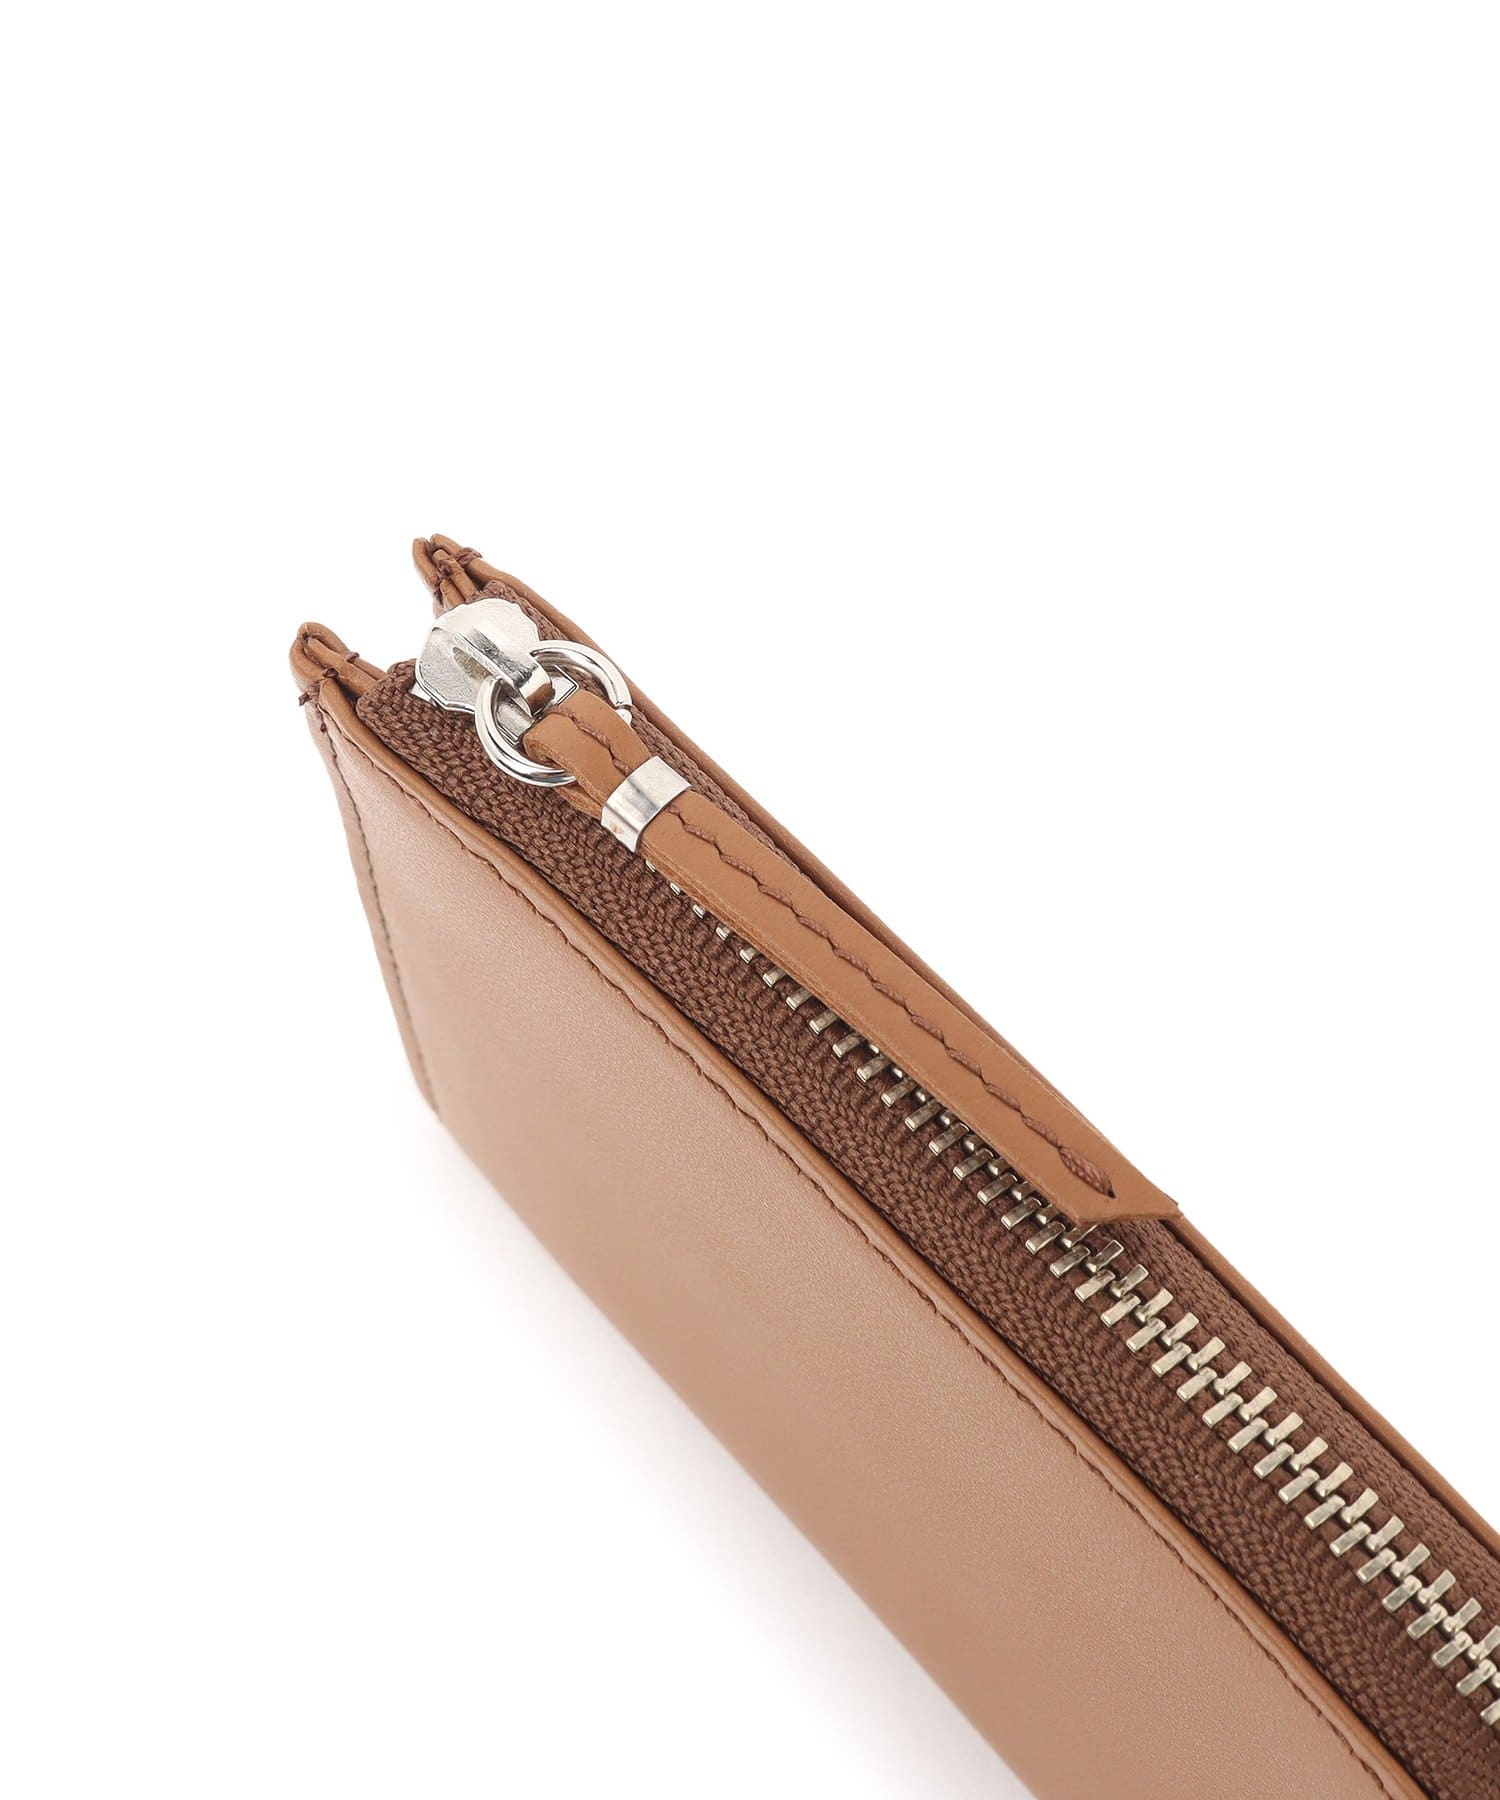 SLOW/スロウ】Fold In Half Leather Wallet for CIAOPANIC/別注二つ折りレザーウォレット 